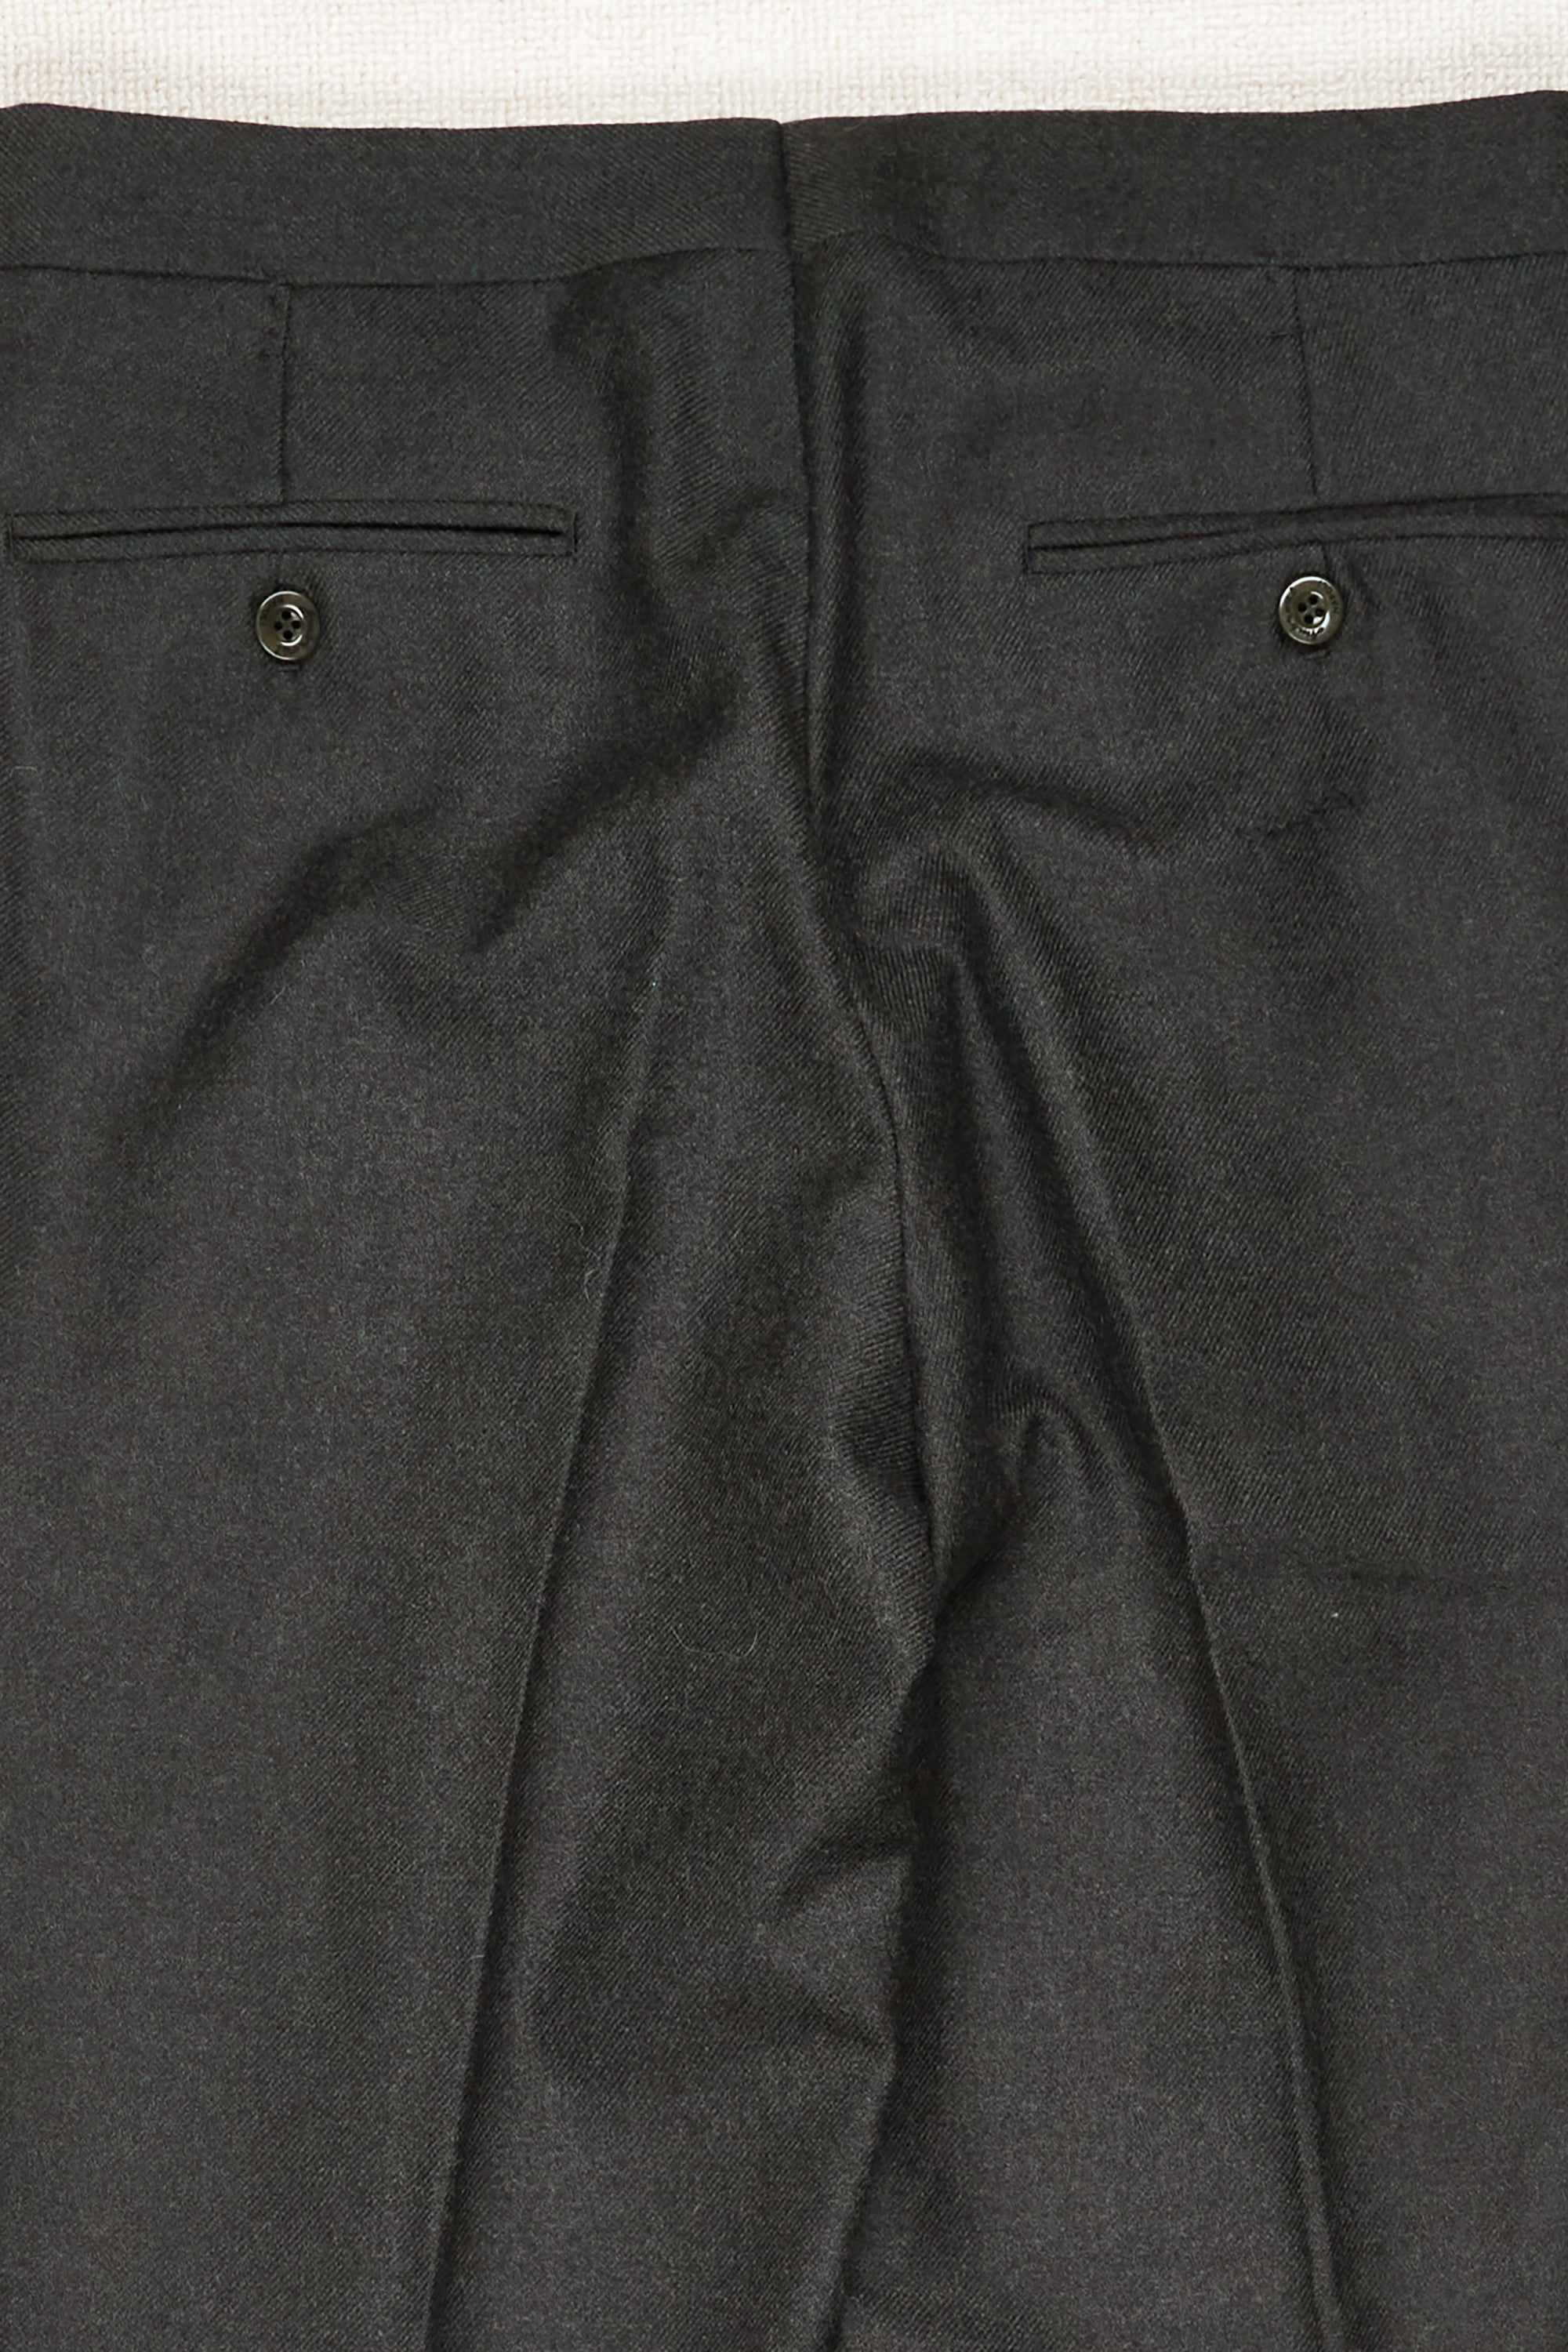 Ambrosi Napoli Dark Grey Twill Wool Single-Pleat Trousers